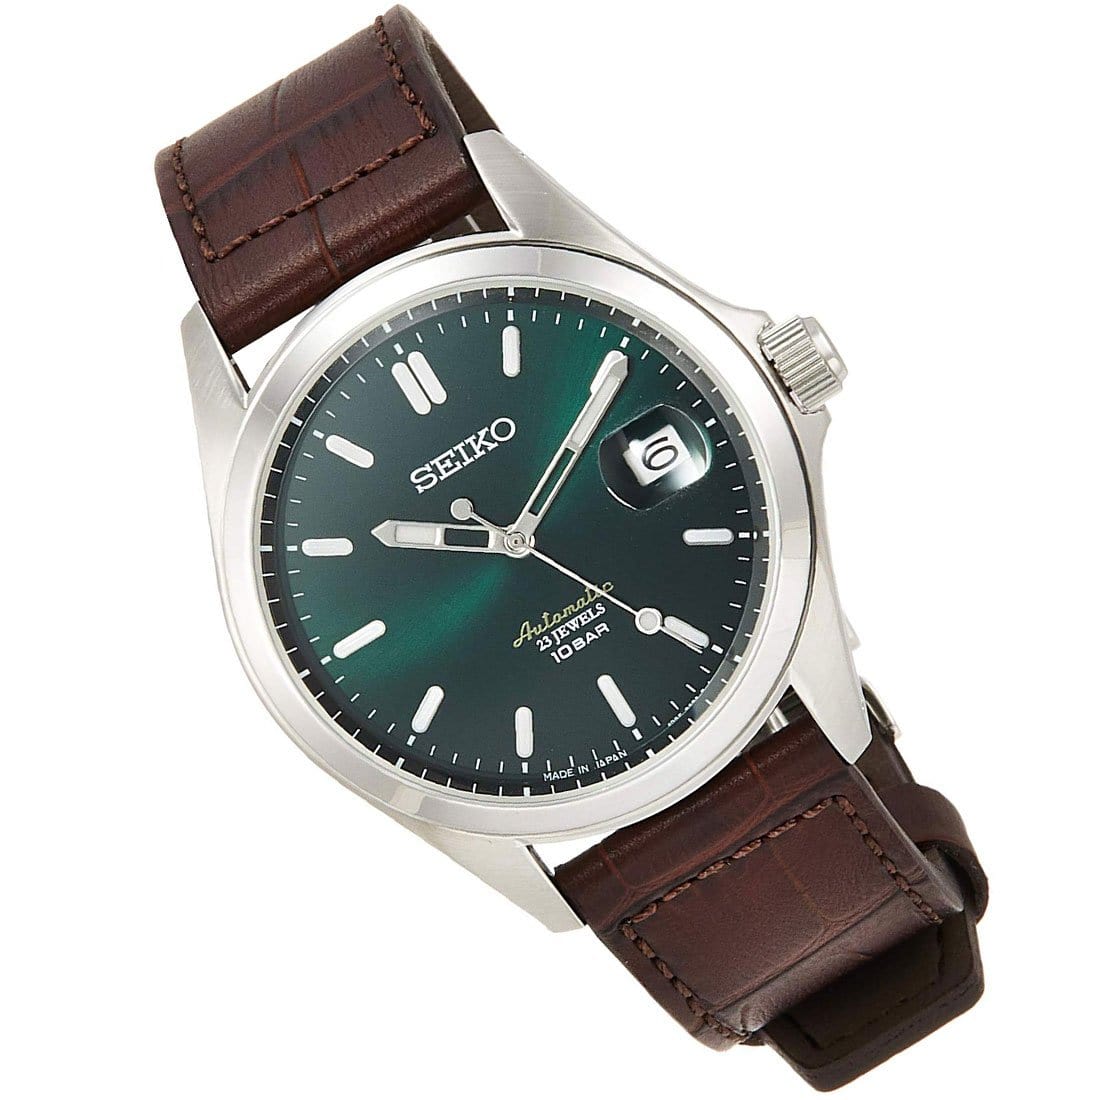 SZSB018 SZSB018J Seiko Classic Automatic JDM Watch (Avail March 31)